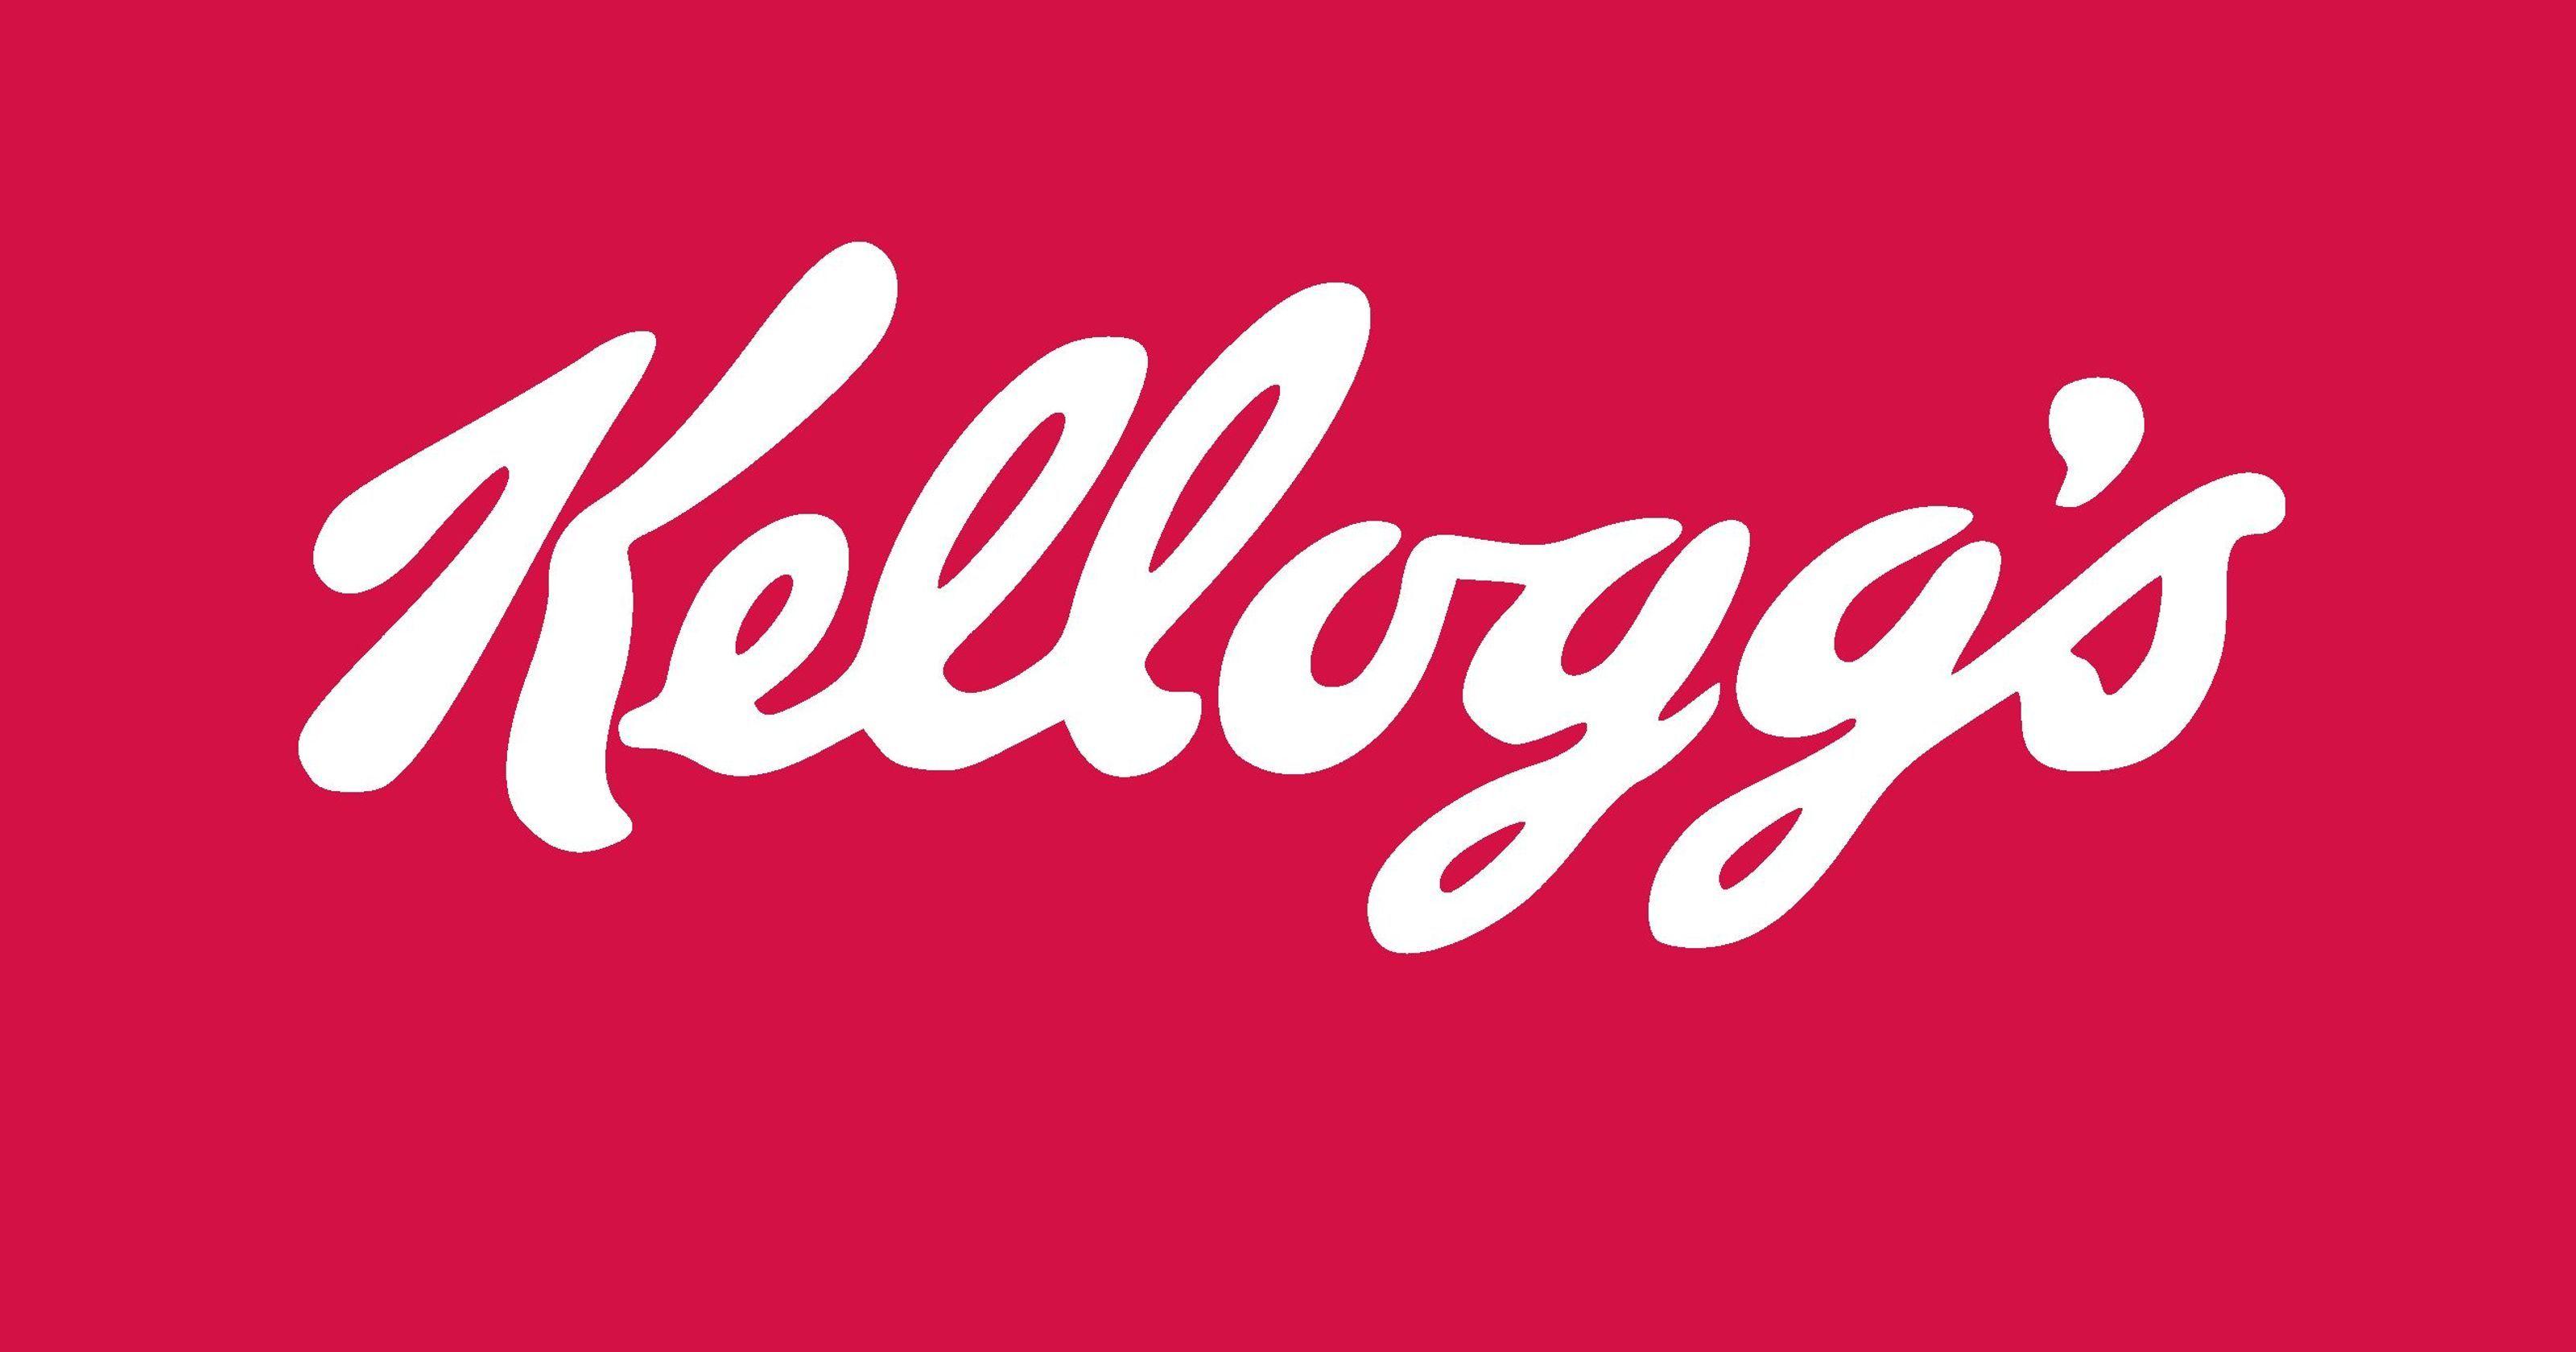 Kellogg Logo - Woman sues Kellogg after developing sepsis